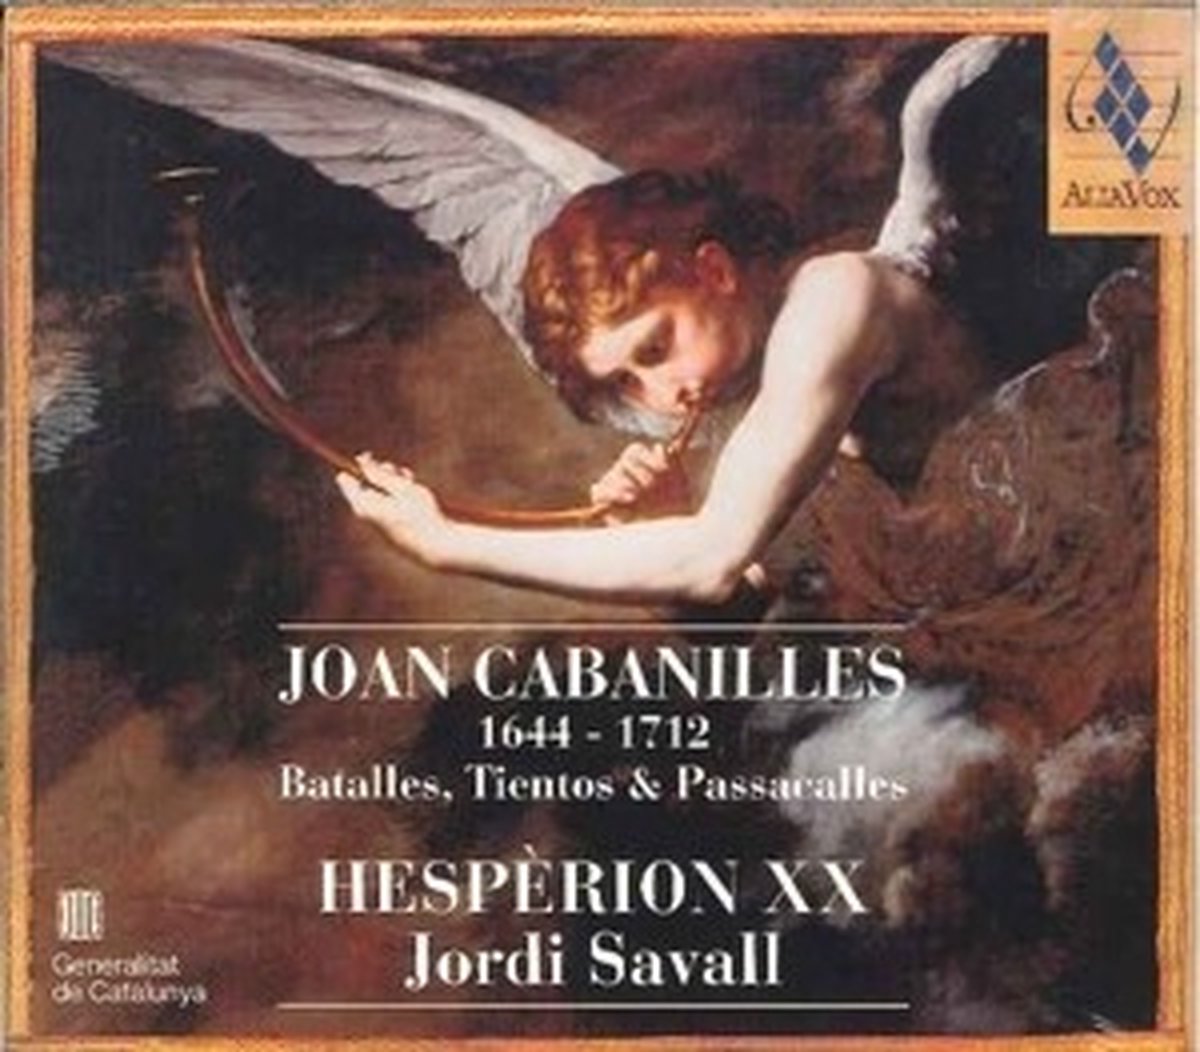 Jordi Savall & Hesperion XX - Batalles - Tientos & Passadall (CD) - Jordi Savall & Hesperion XX